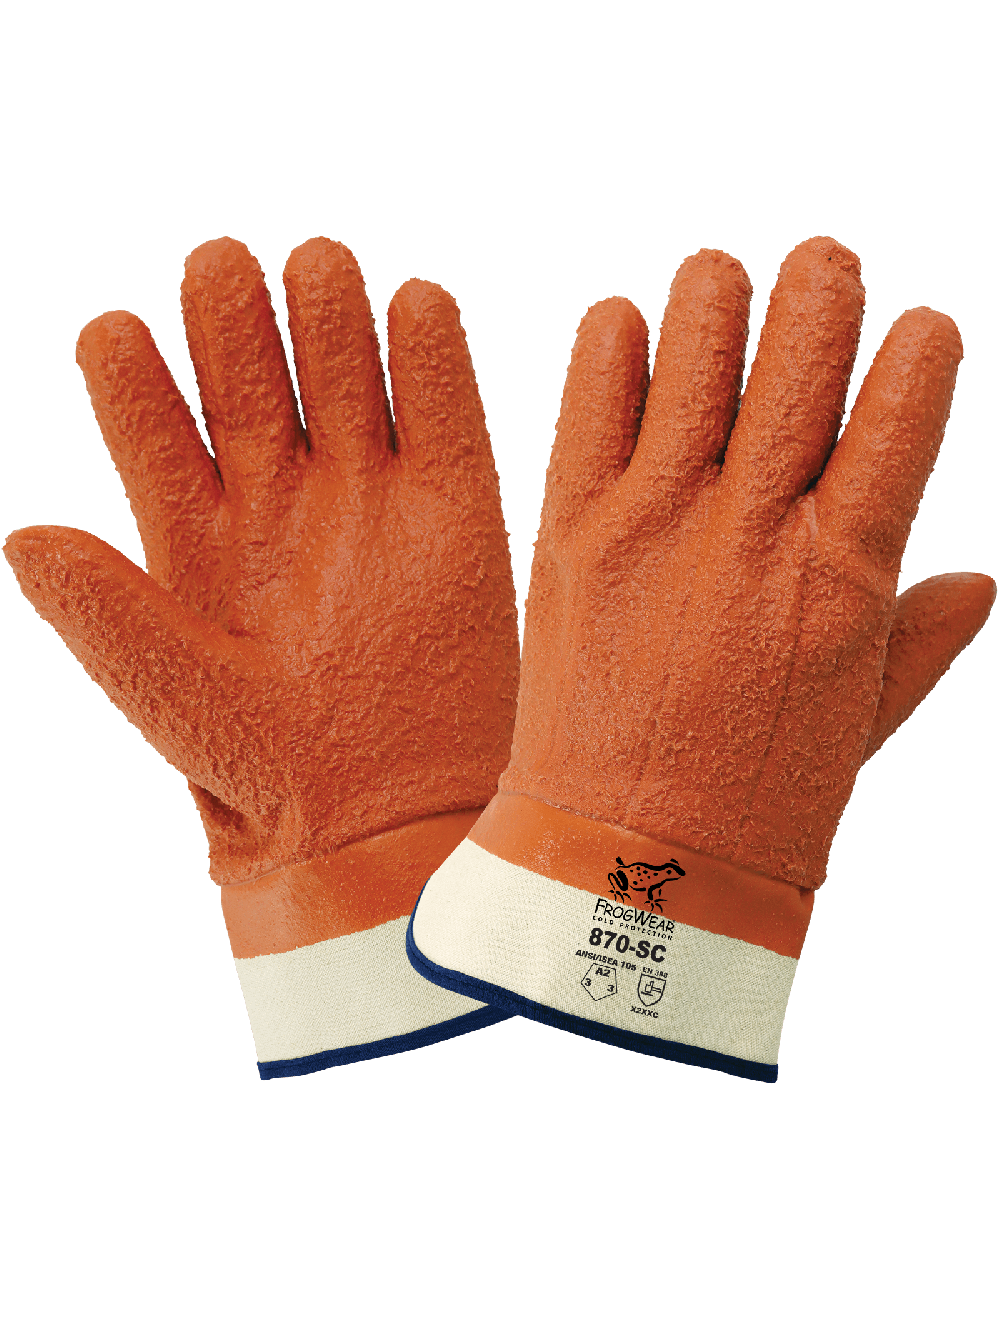 A1012 Rubber Coated Cotton Gloves - Ecoshield Asphalt